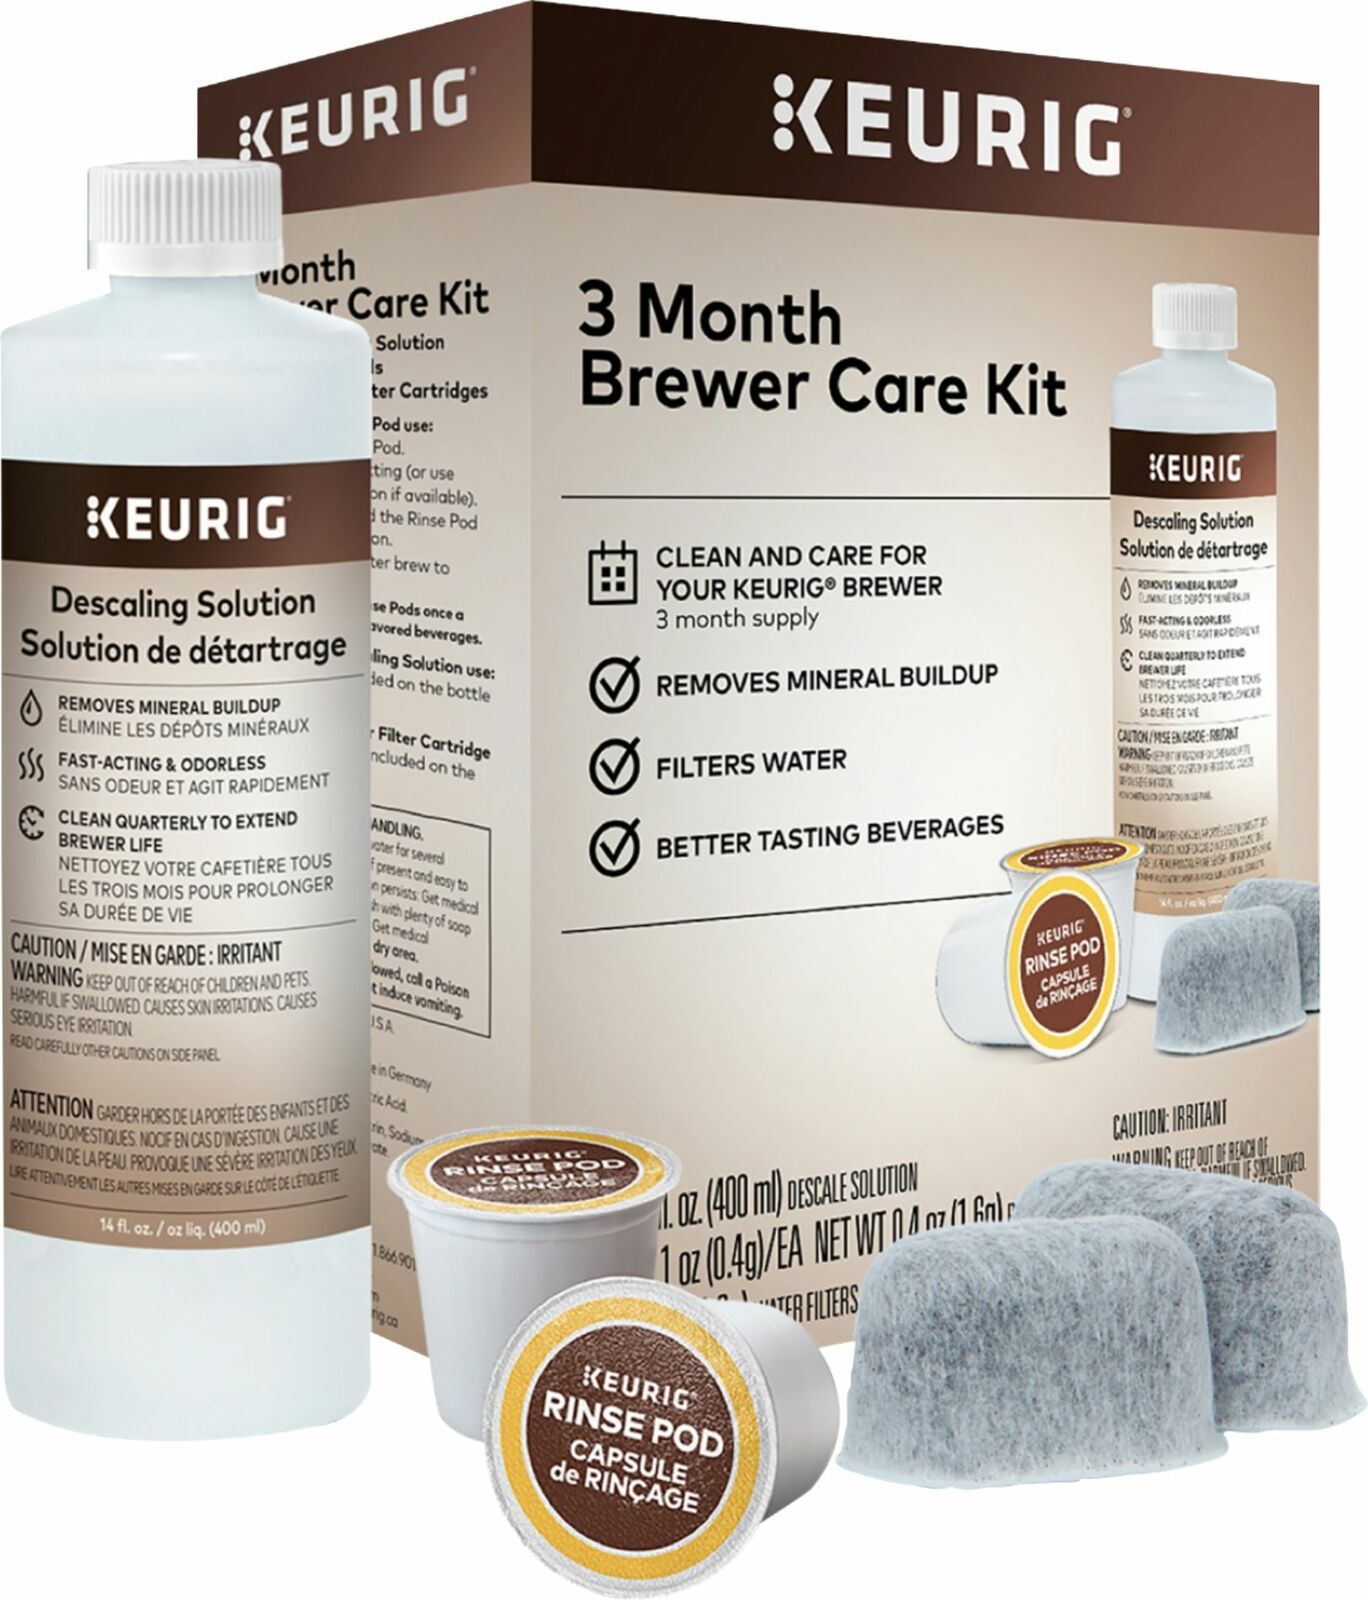 Keurig 3-Month Brewer Care Kit for Most Keurig Coffee Makers